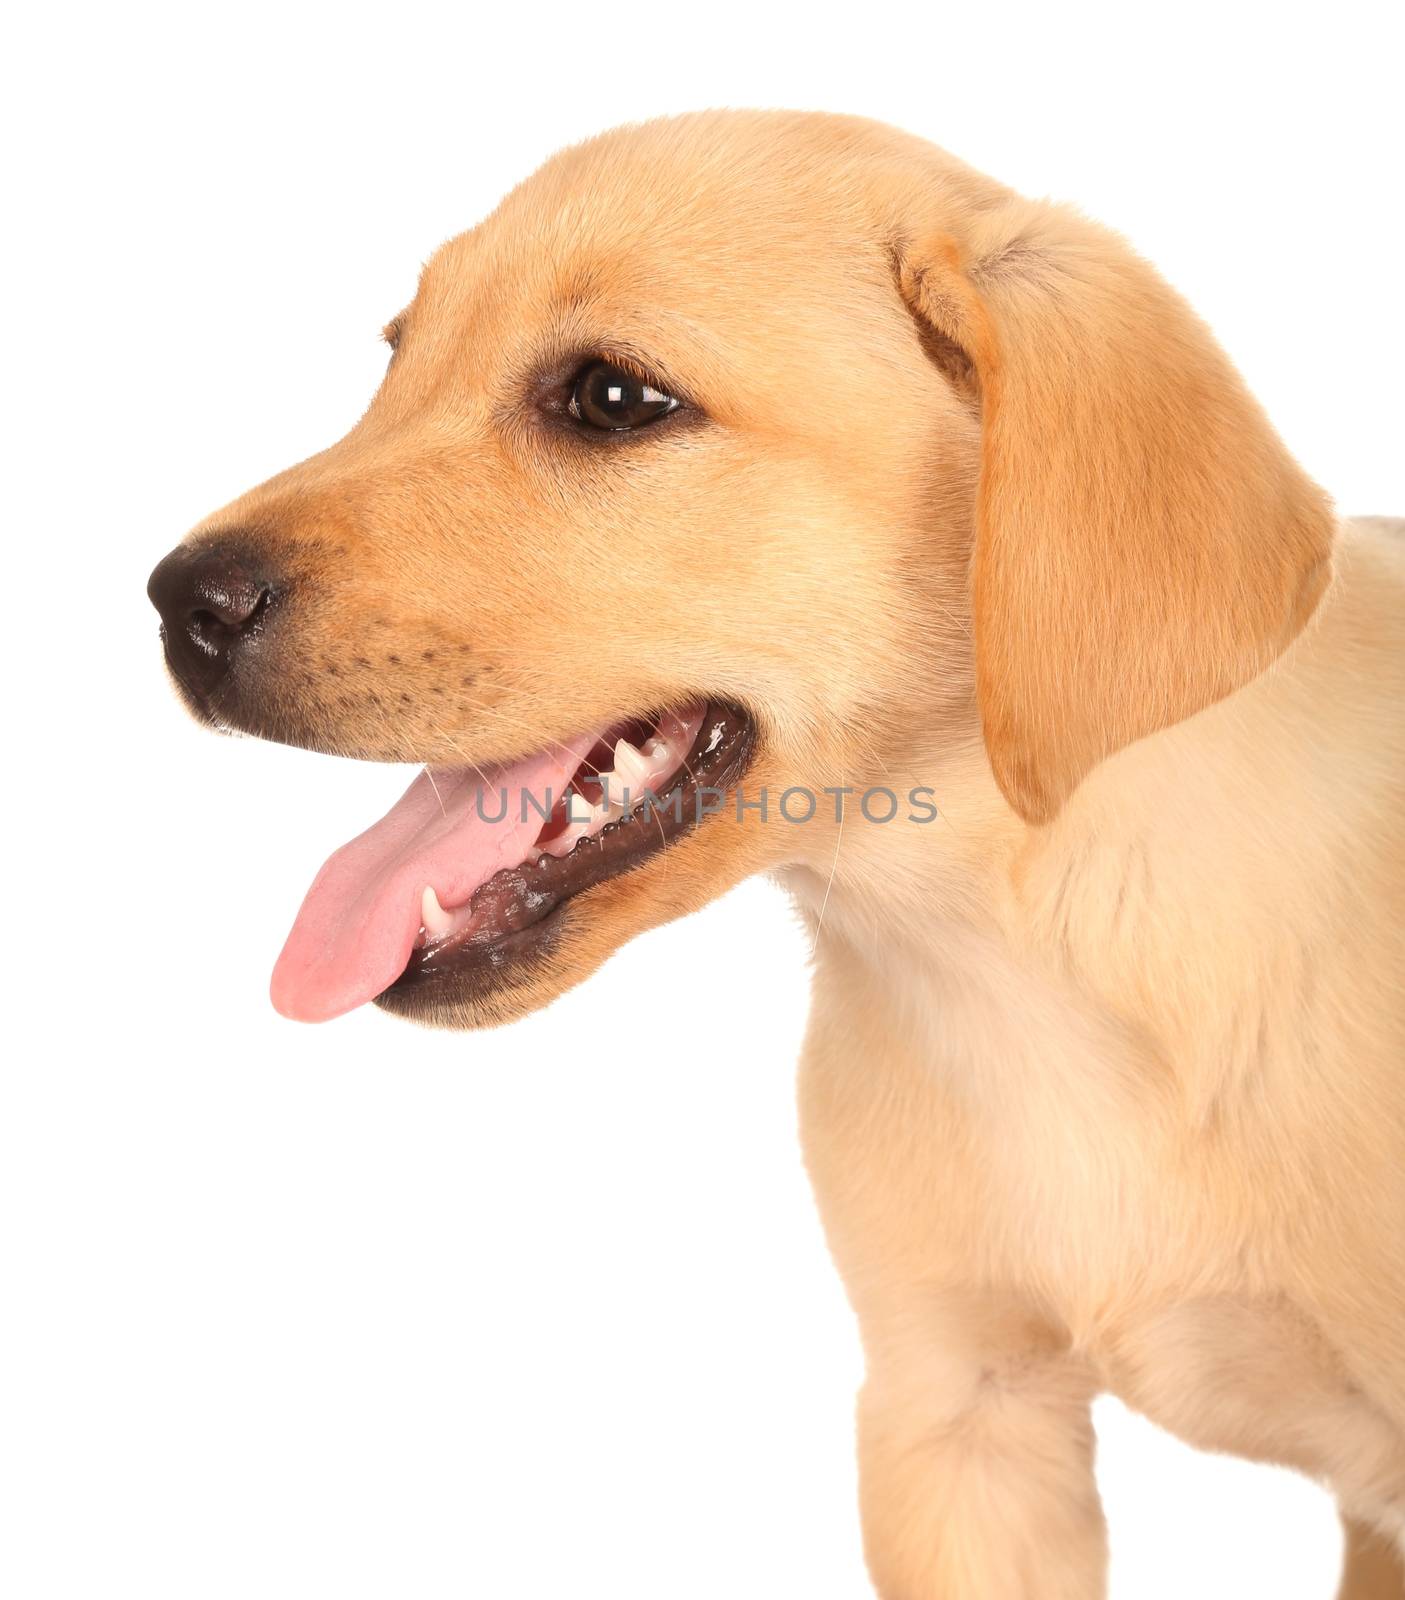 Cute Labrador Puppy - Portrait on white background